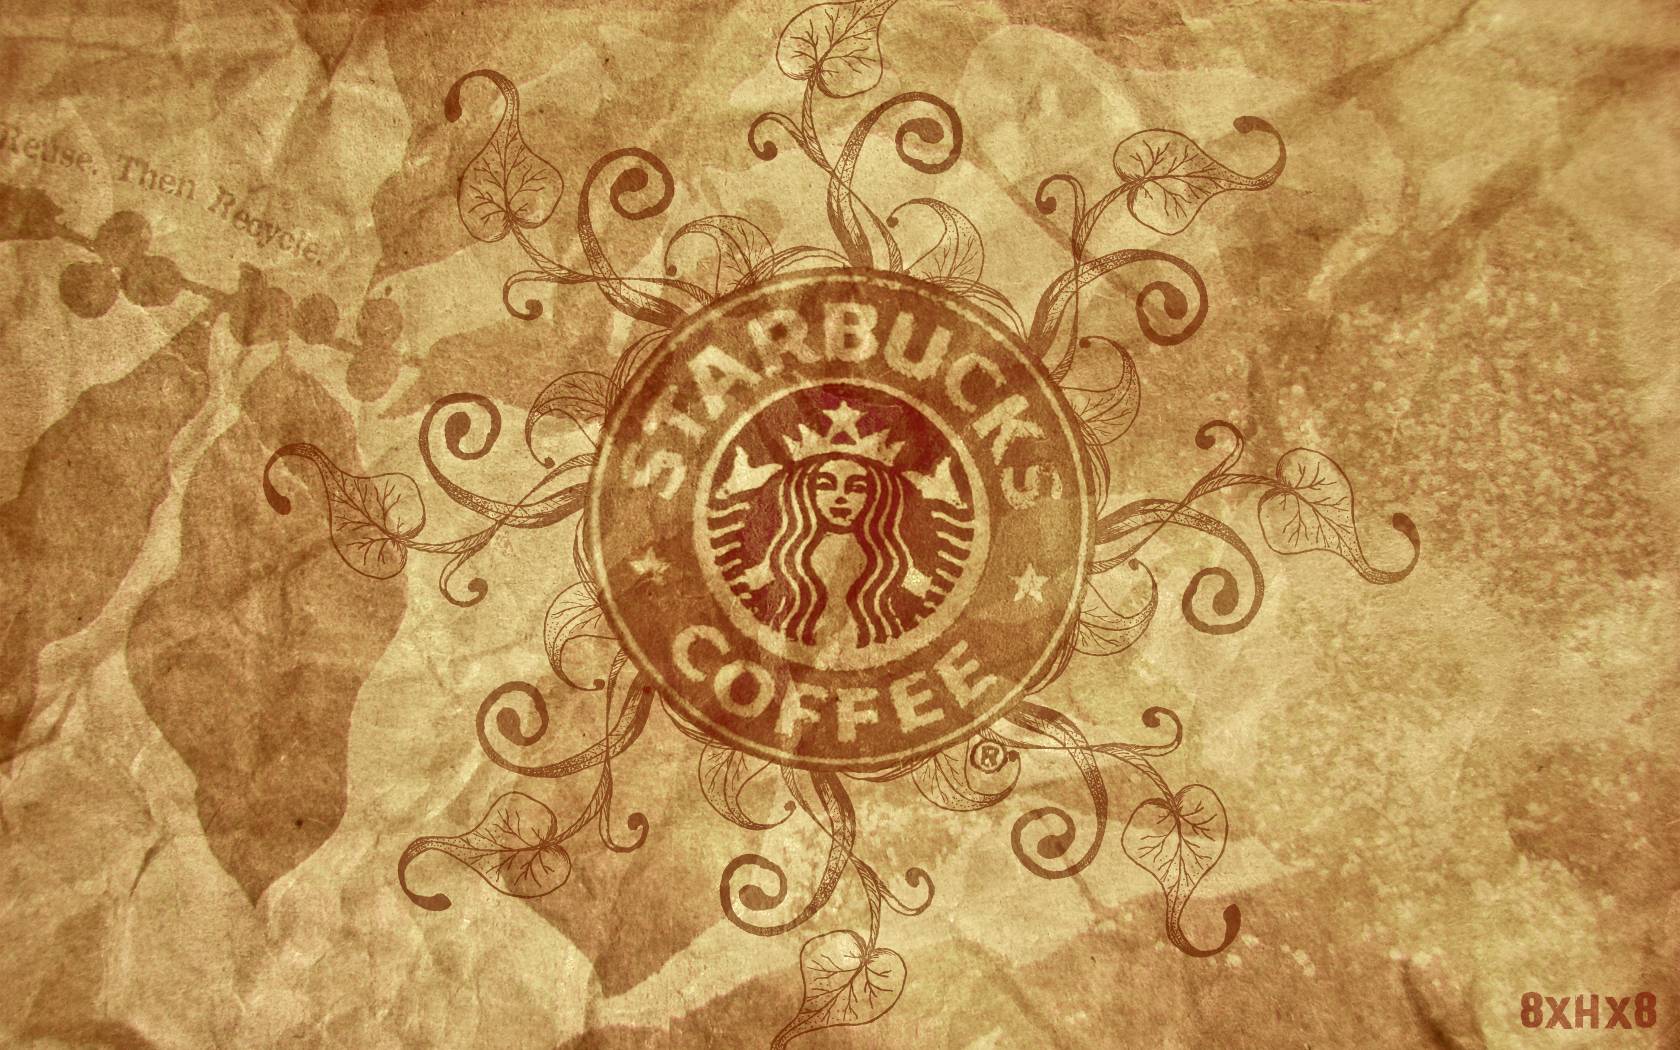 Starbucks Wallpapers - Wallpaper Cave